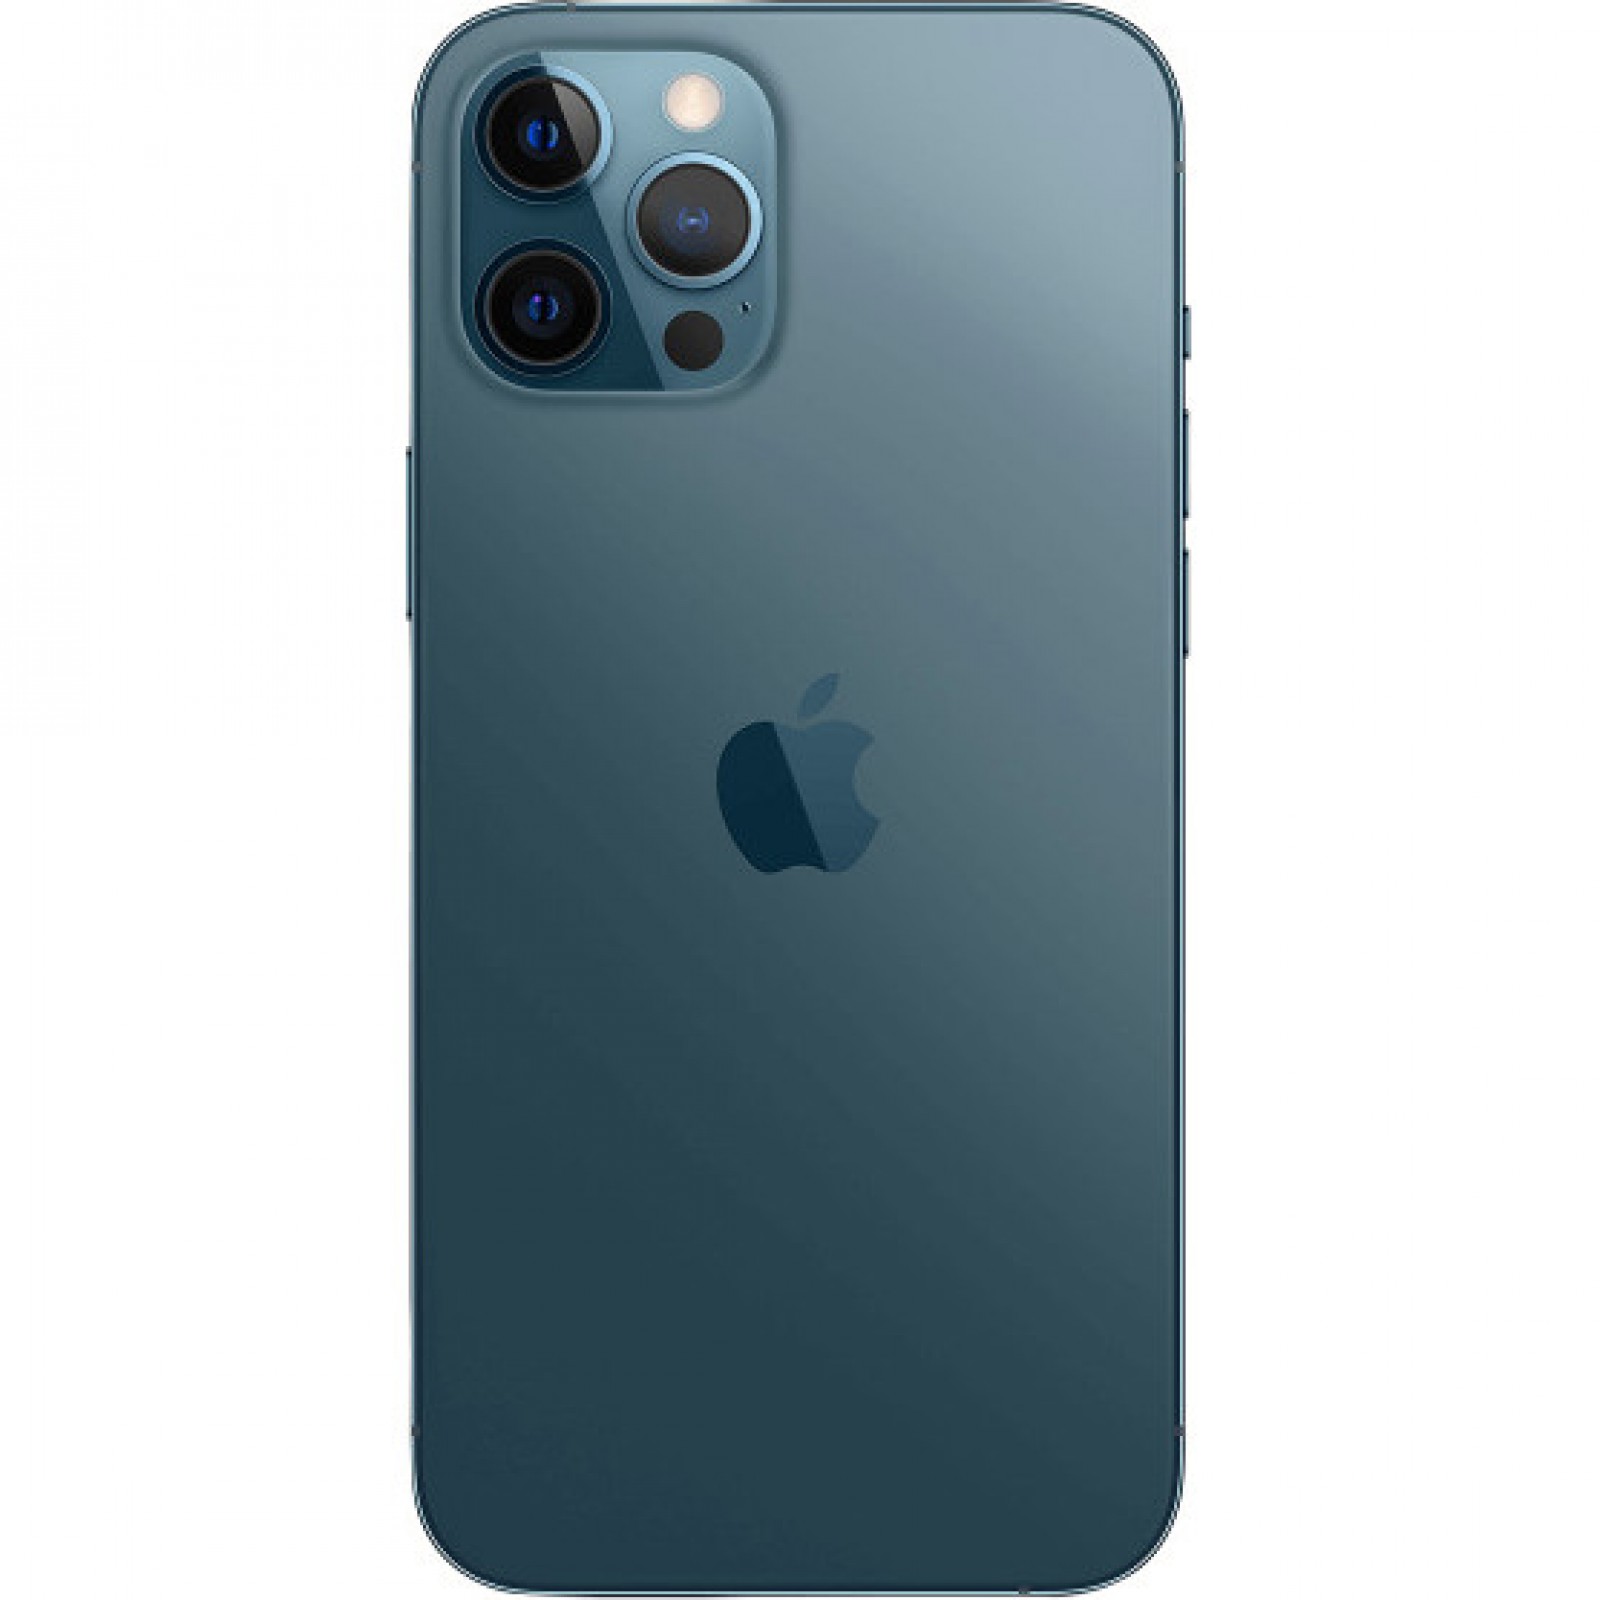 Apple iPhone 12 Pro Max (128GB) Pacific Blue